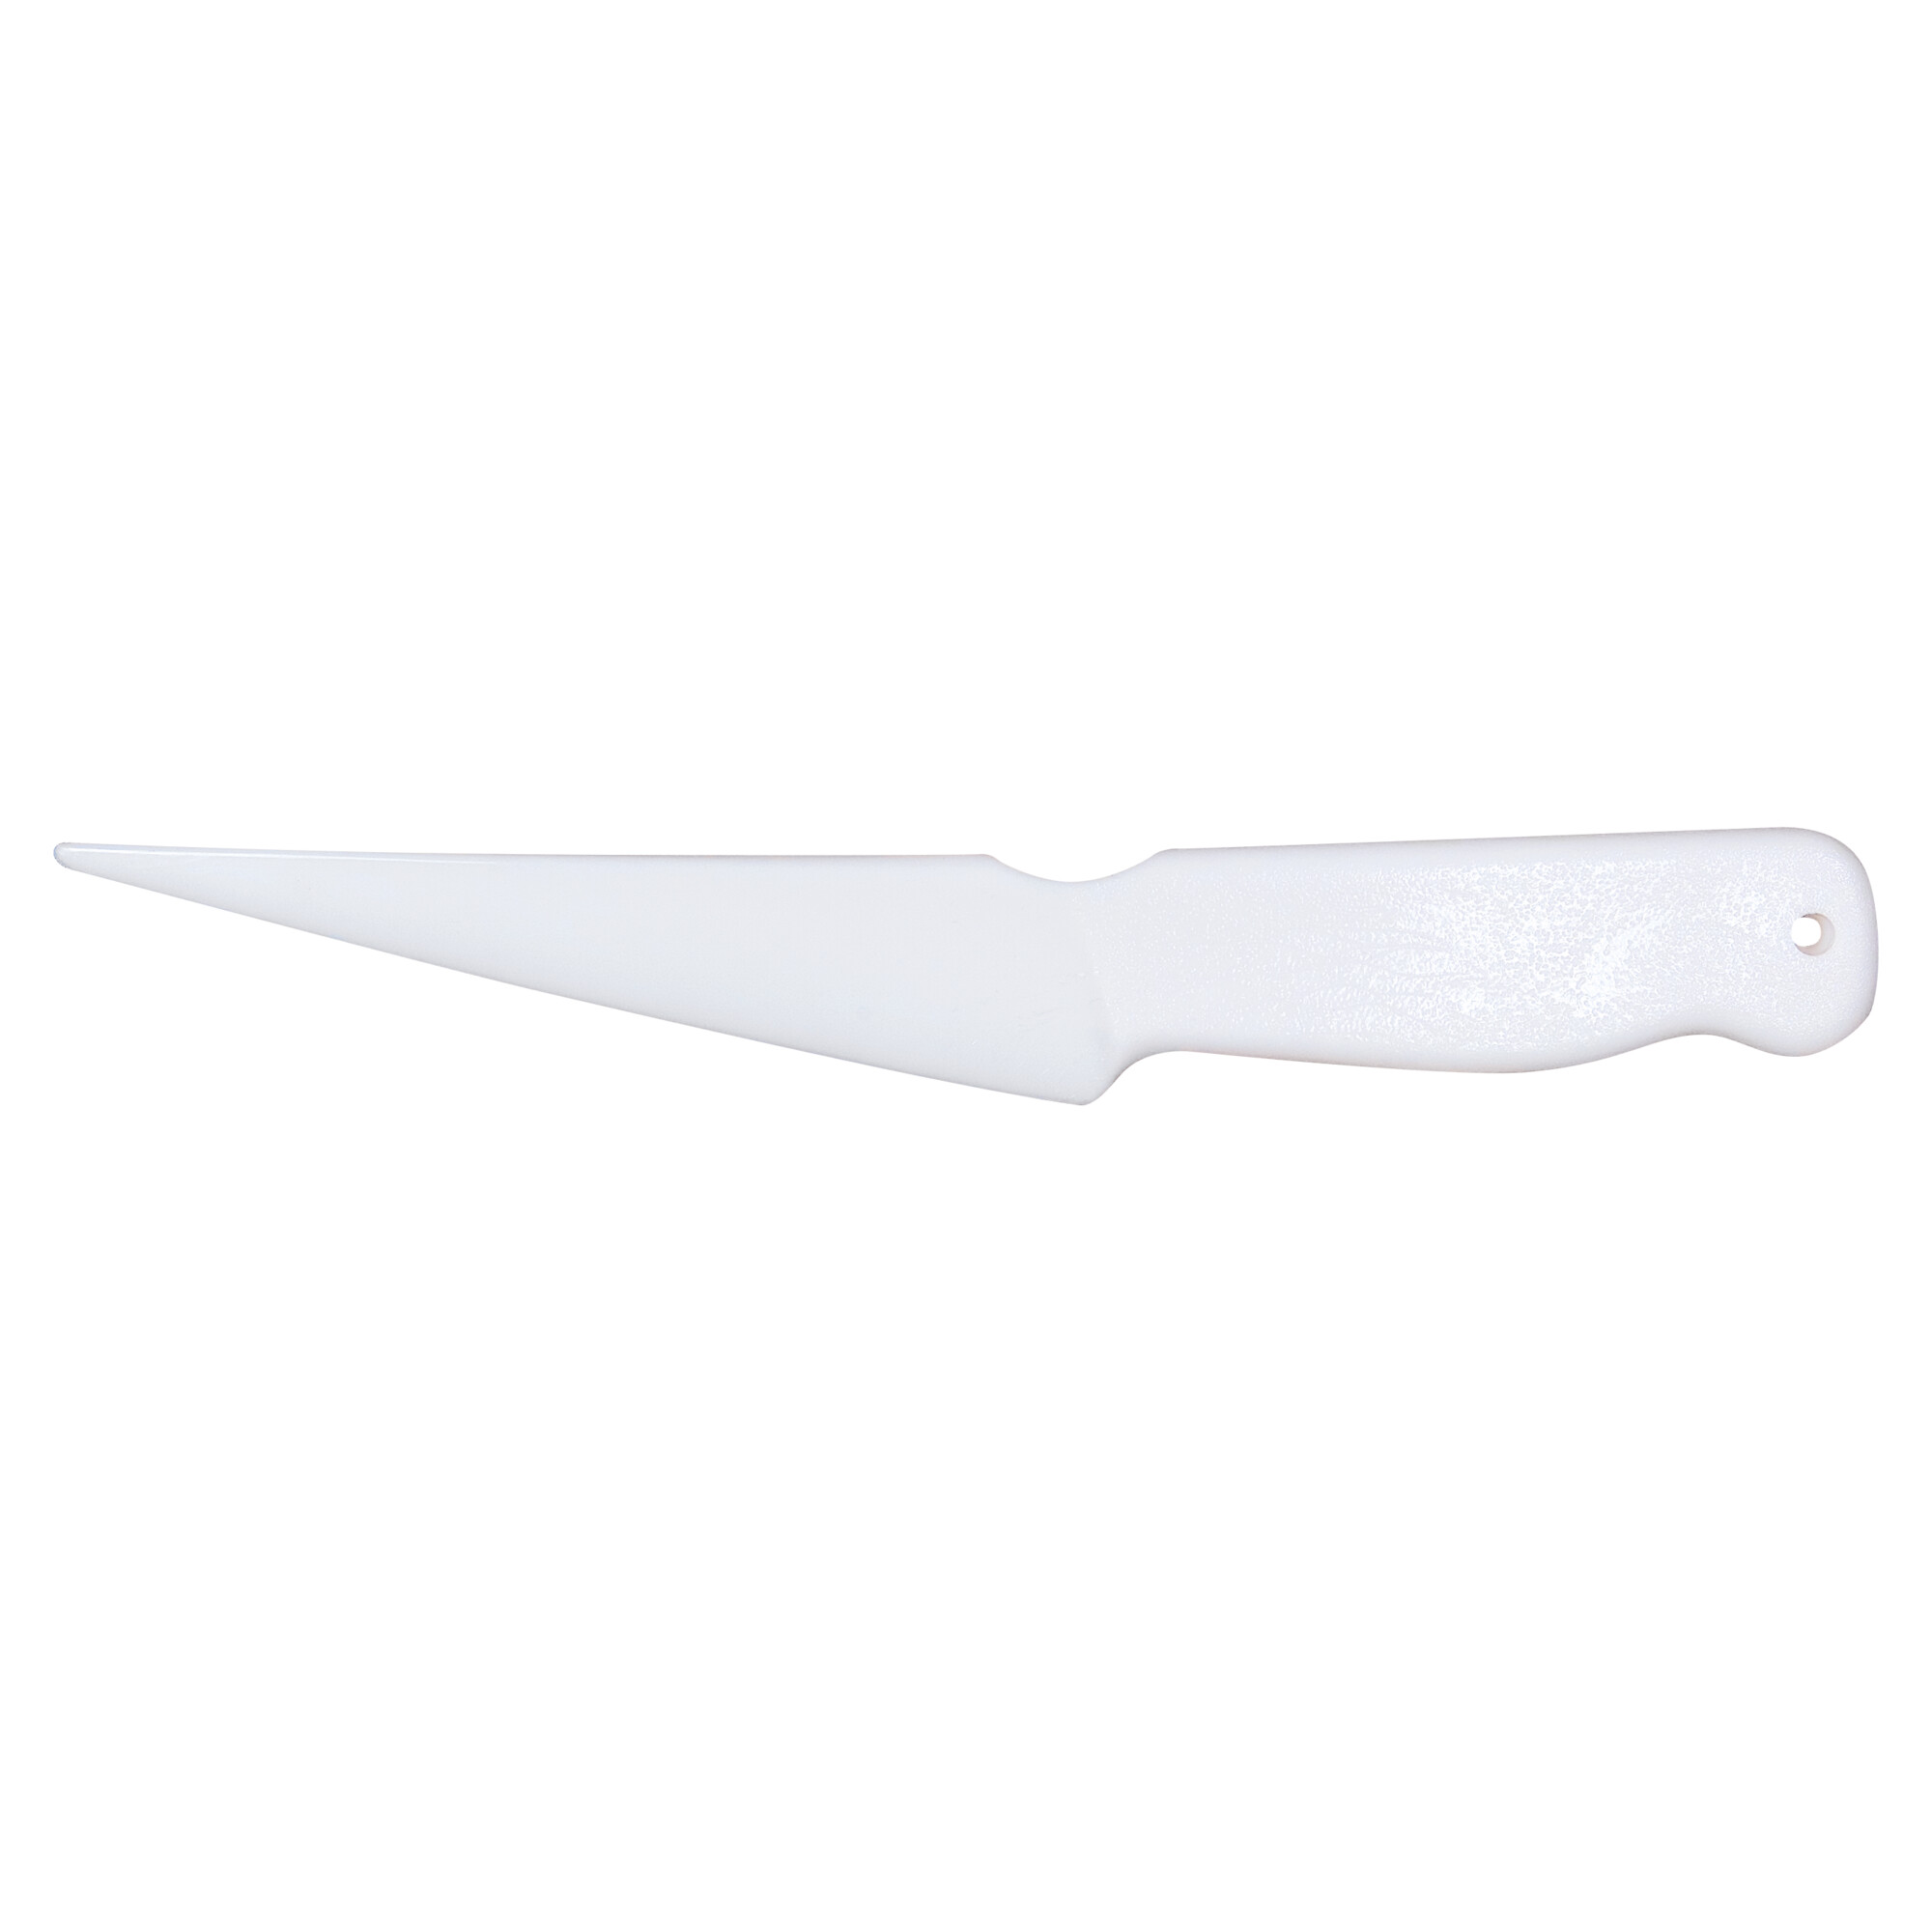 Professional fondant modelling tool – Marzipan knife